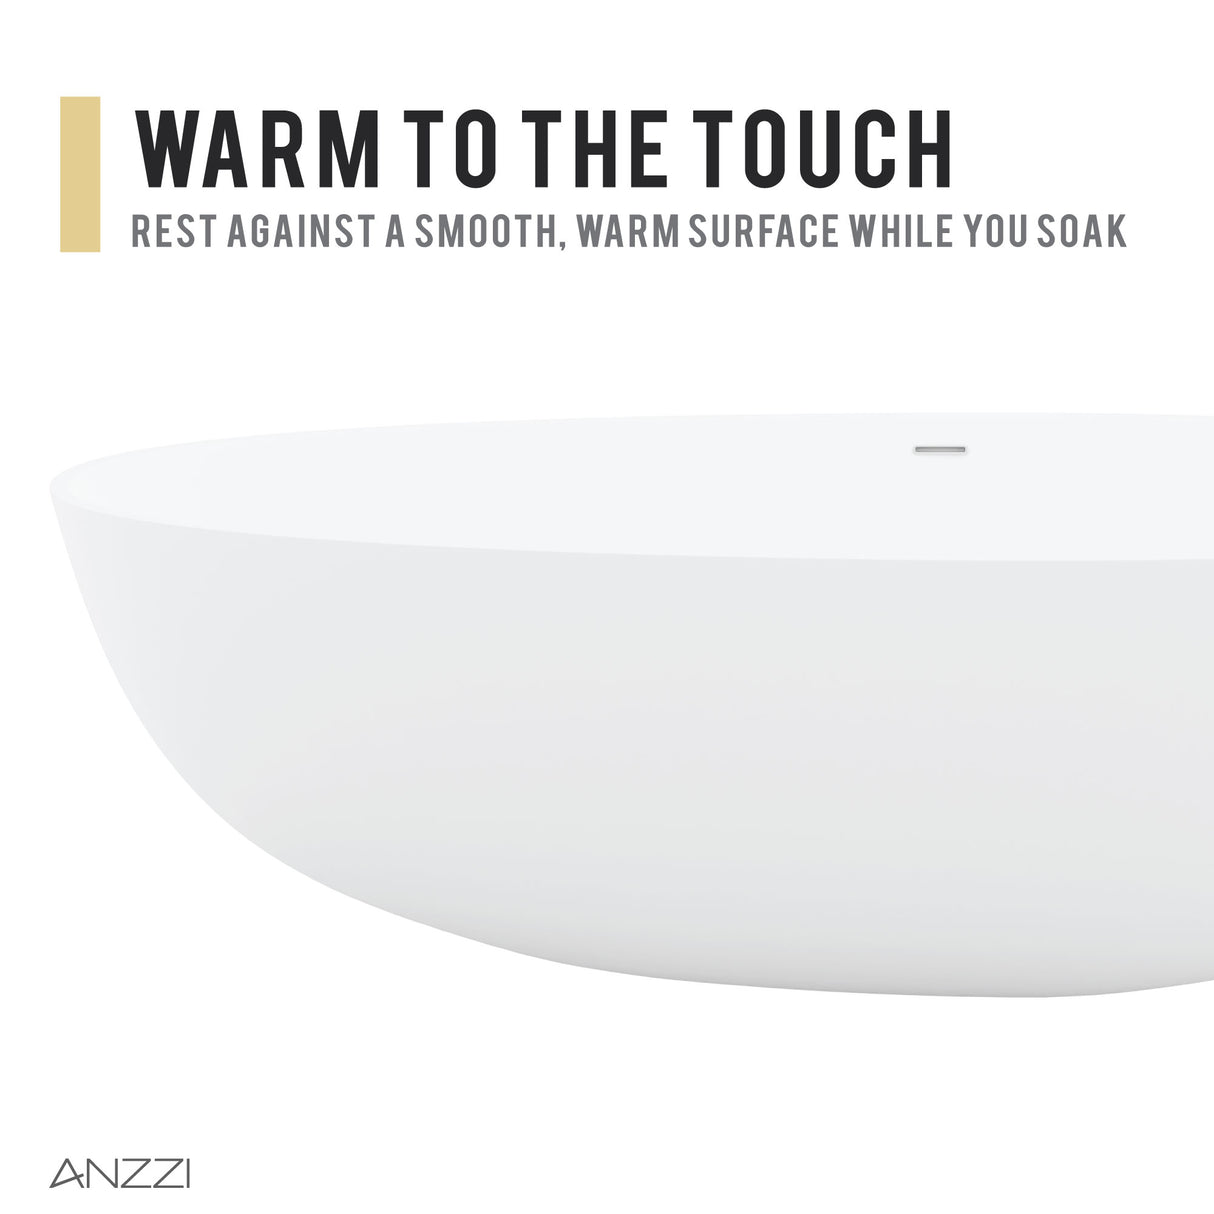 ANZZI FT-AZ502 Fiume 5.6 ft. Man-Made Stone Center Drain Freestanding Bathtub in Matte White